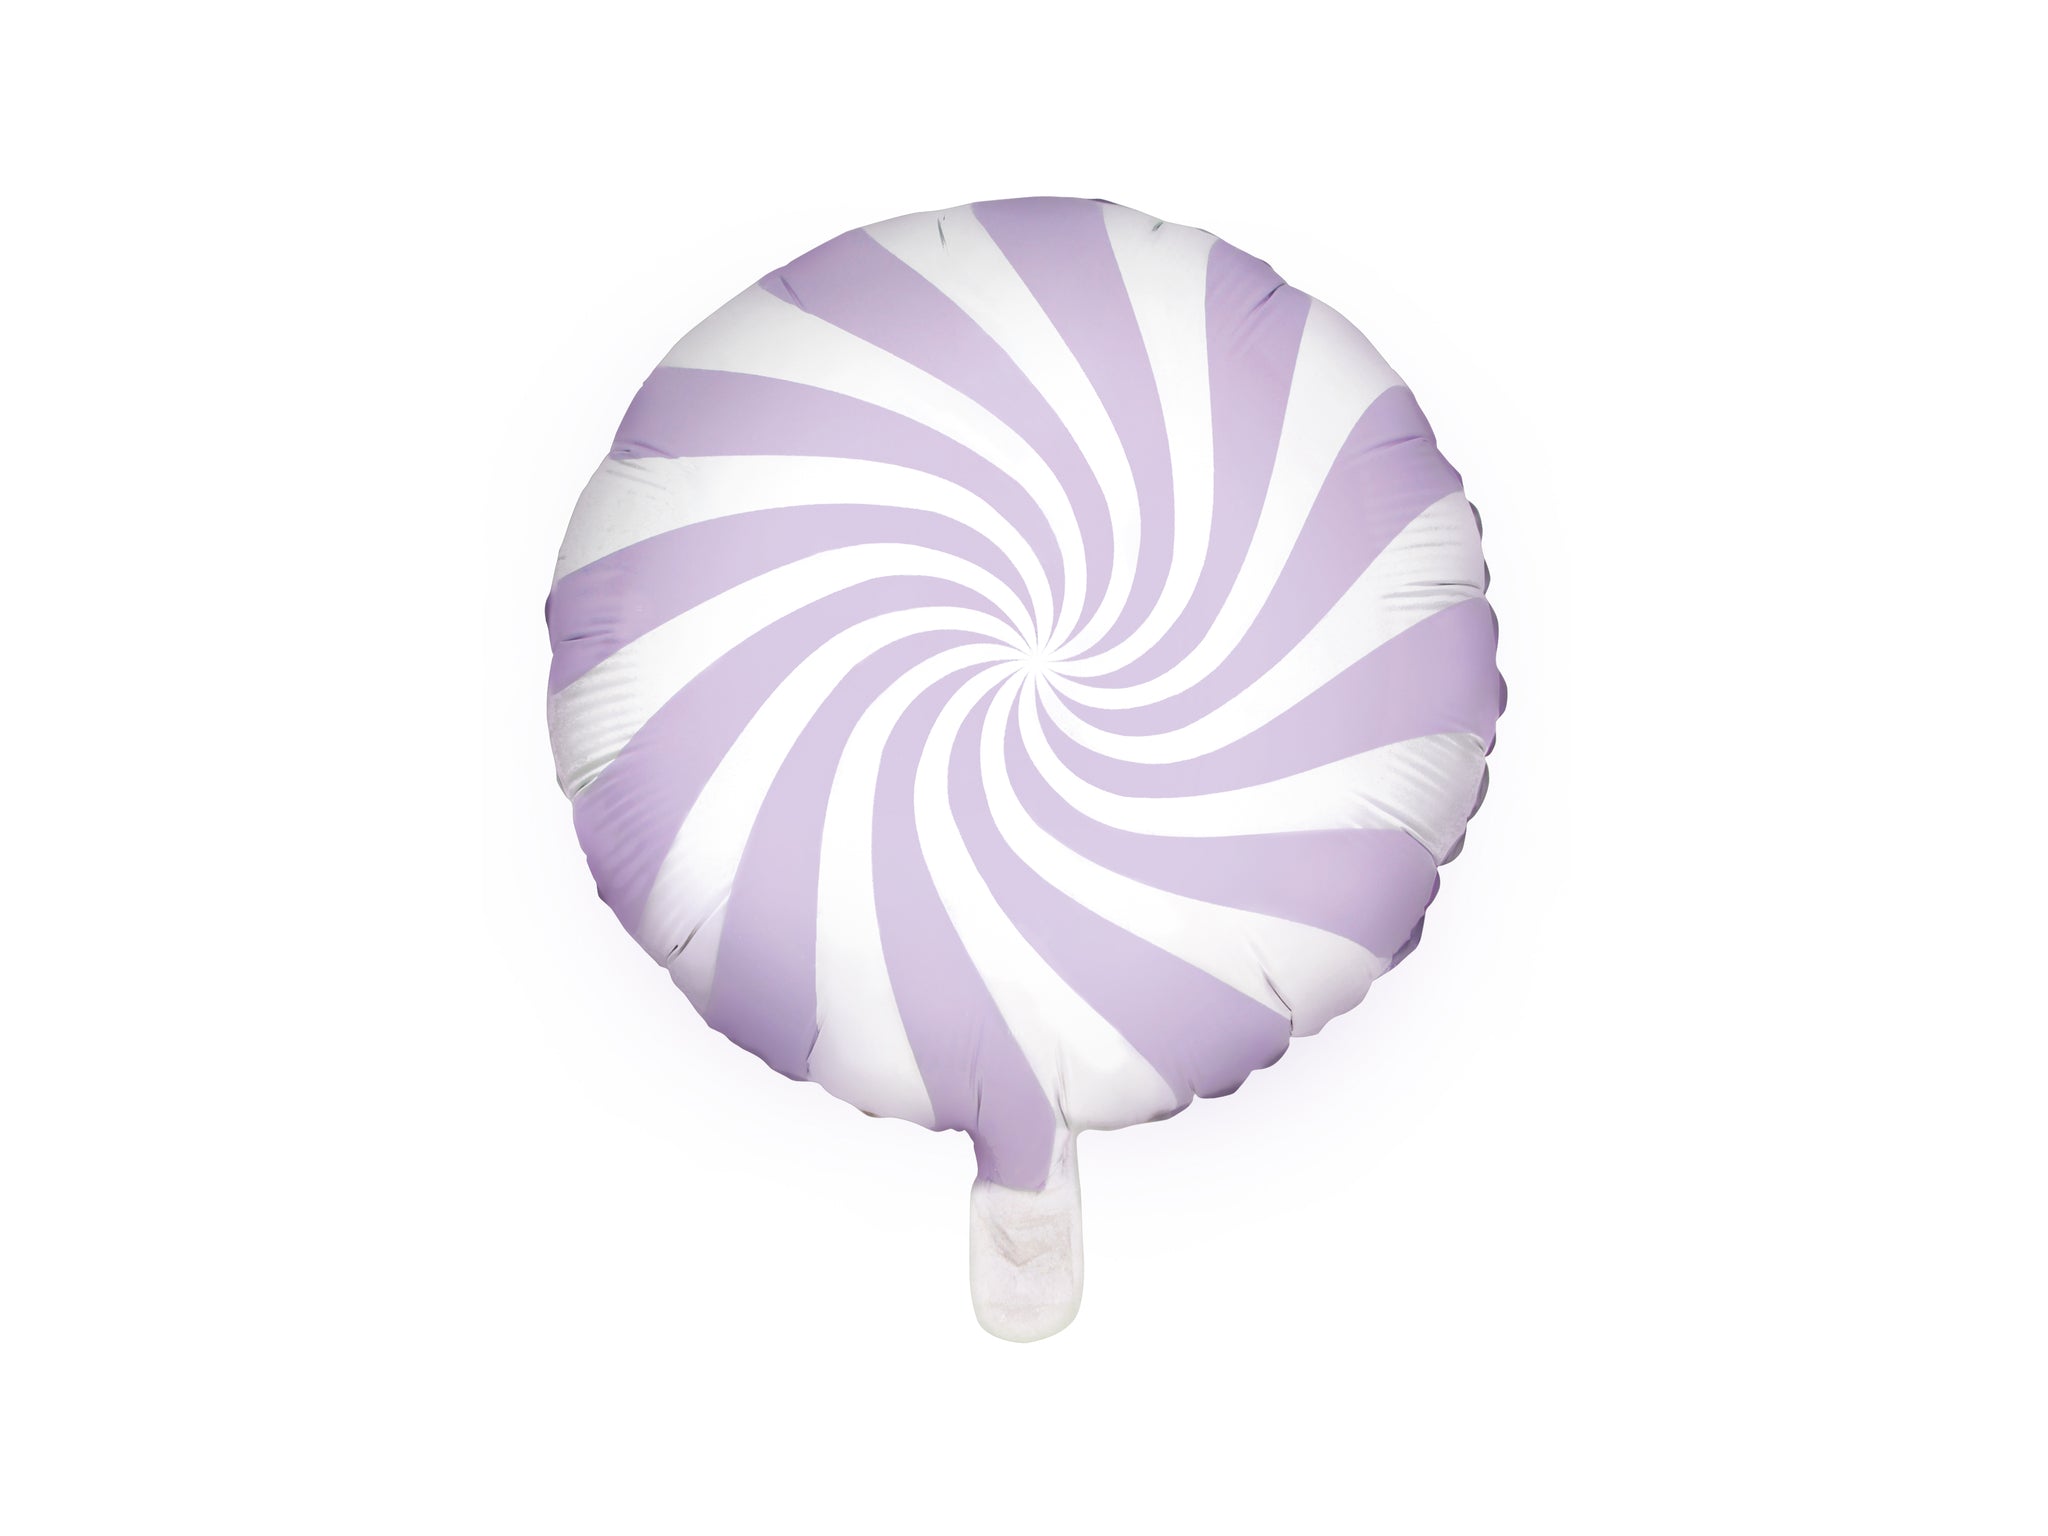 lavender white swirl candy balloon - glitter paper scissors